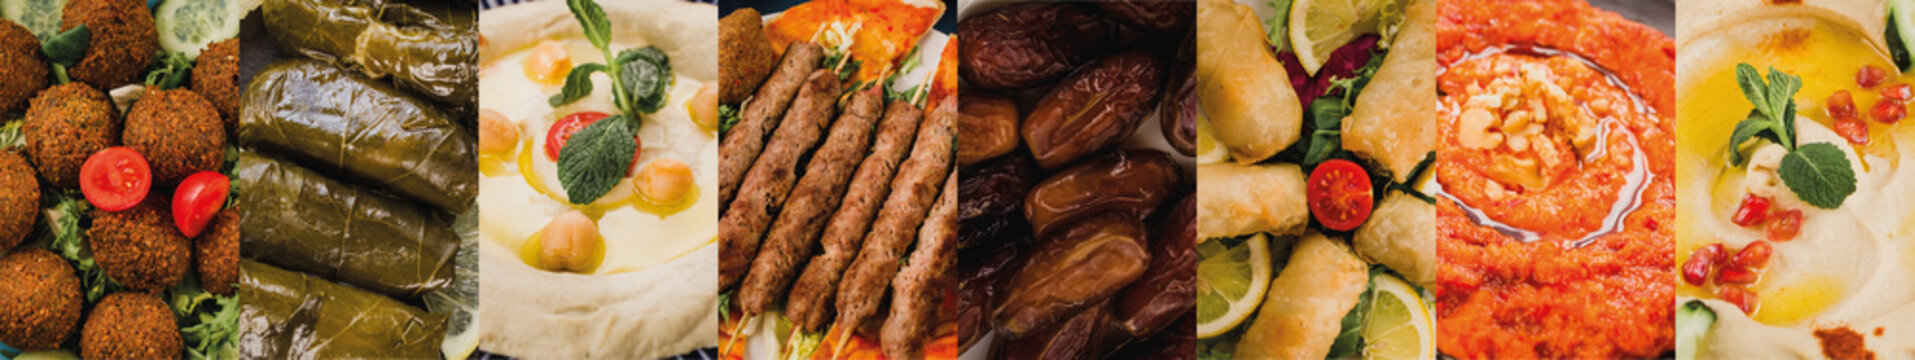 Middle eastern traditional cuisine collage including falafel, dolmas, hummus, halal kebab meat, dates, Muajjanat Sabanej,  muhammara and mutabal. Traditional lebanese food eaten for eid after Ramadan